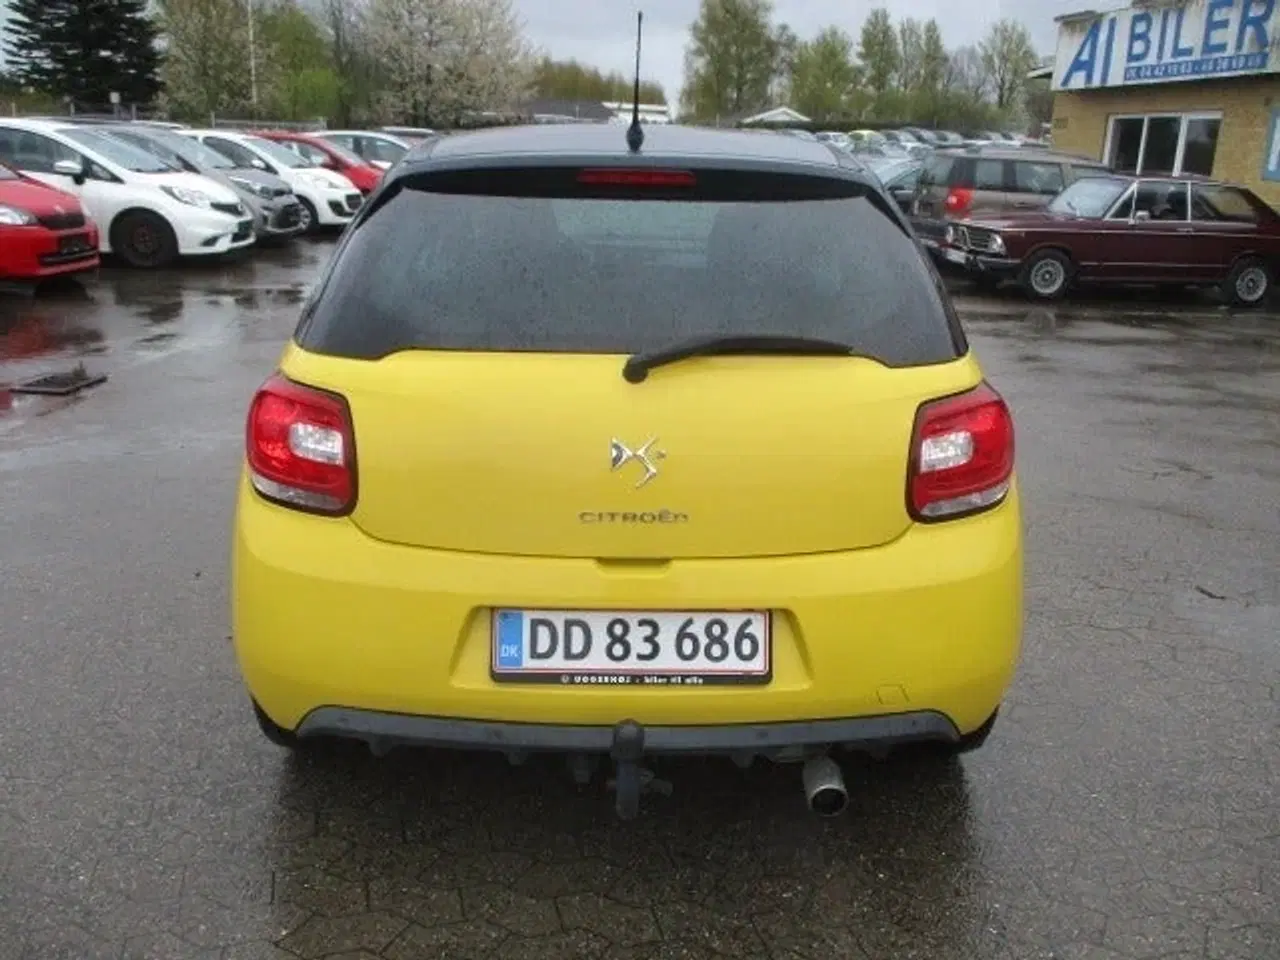 Billede 4 - Citroën DS3 1,6 VTi 120 DStyle